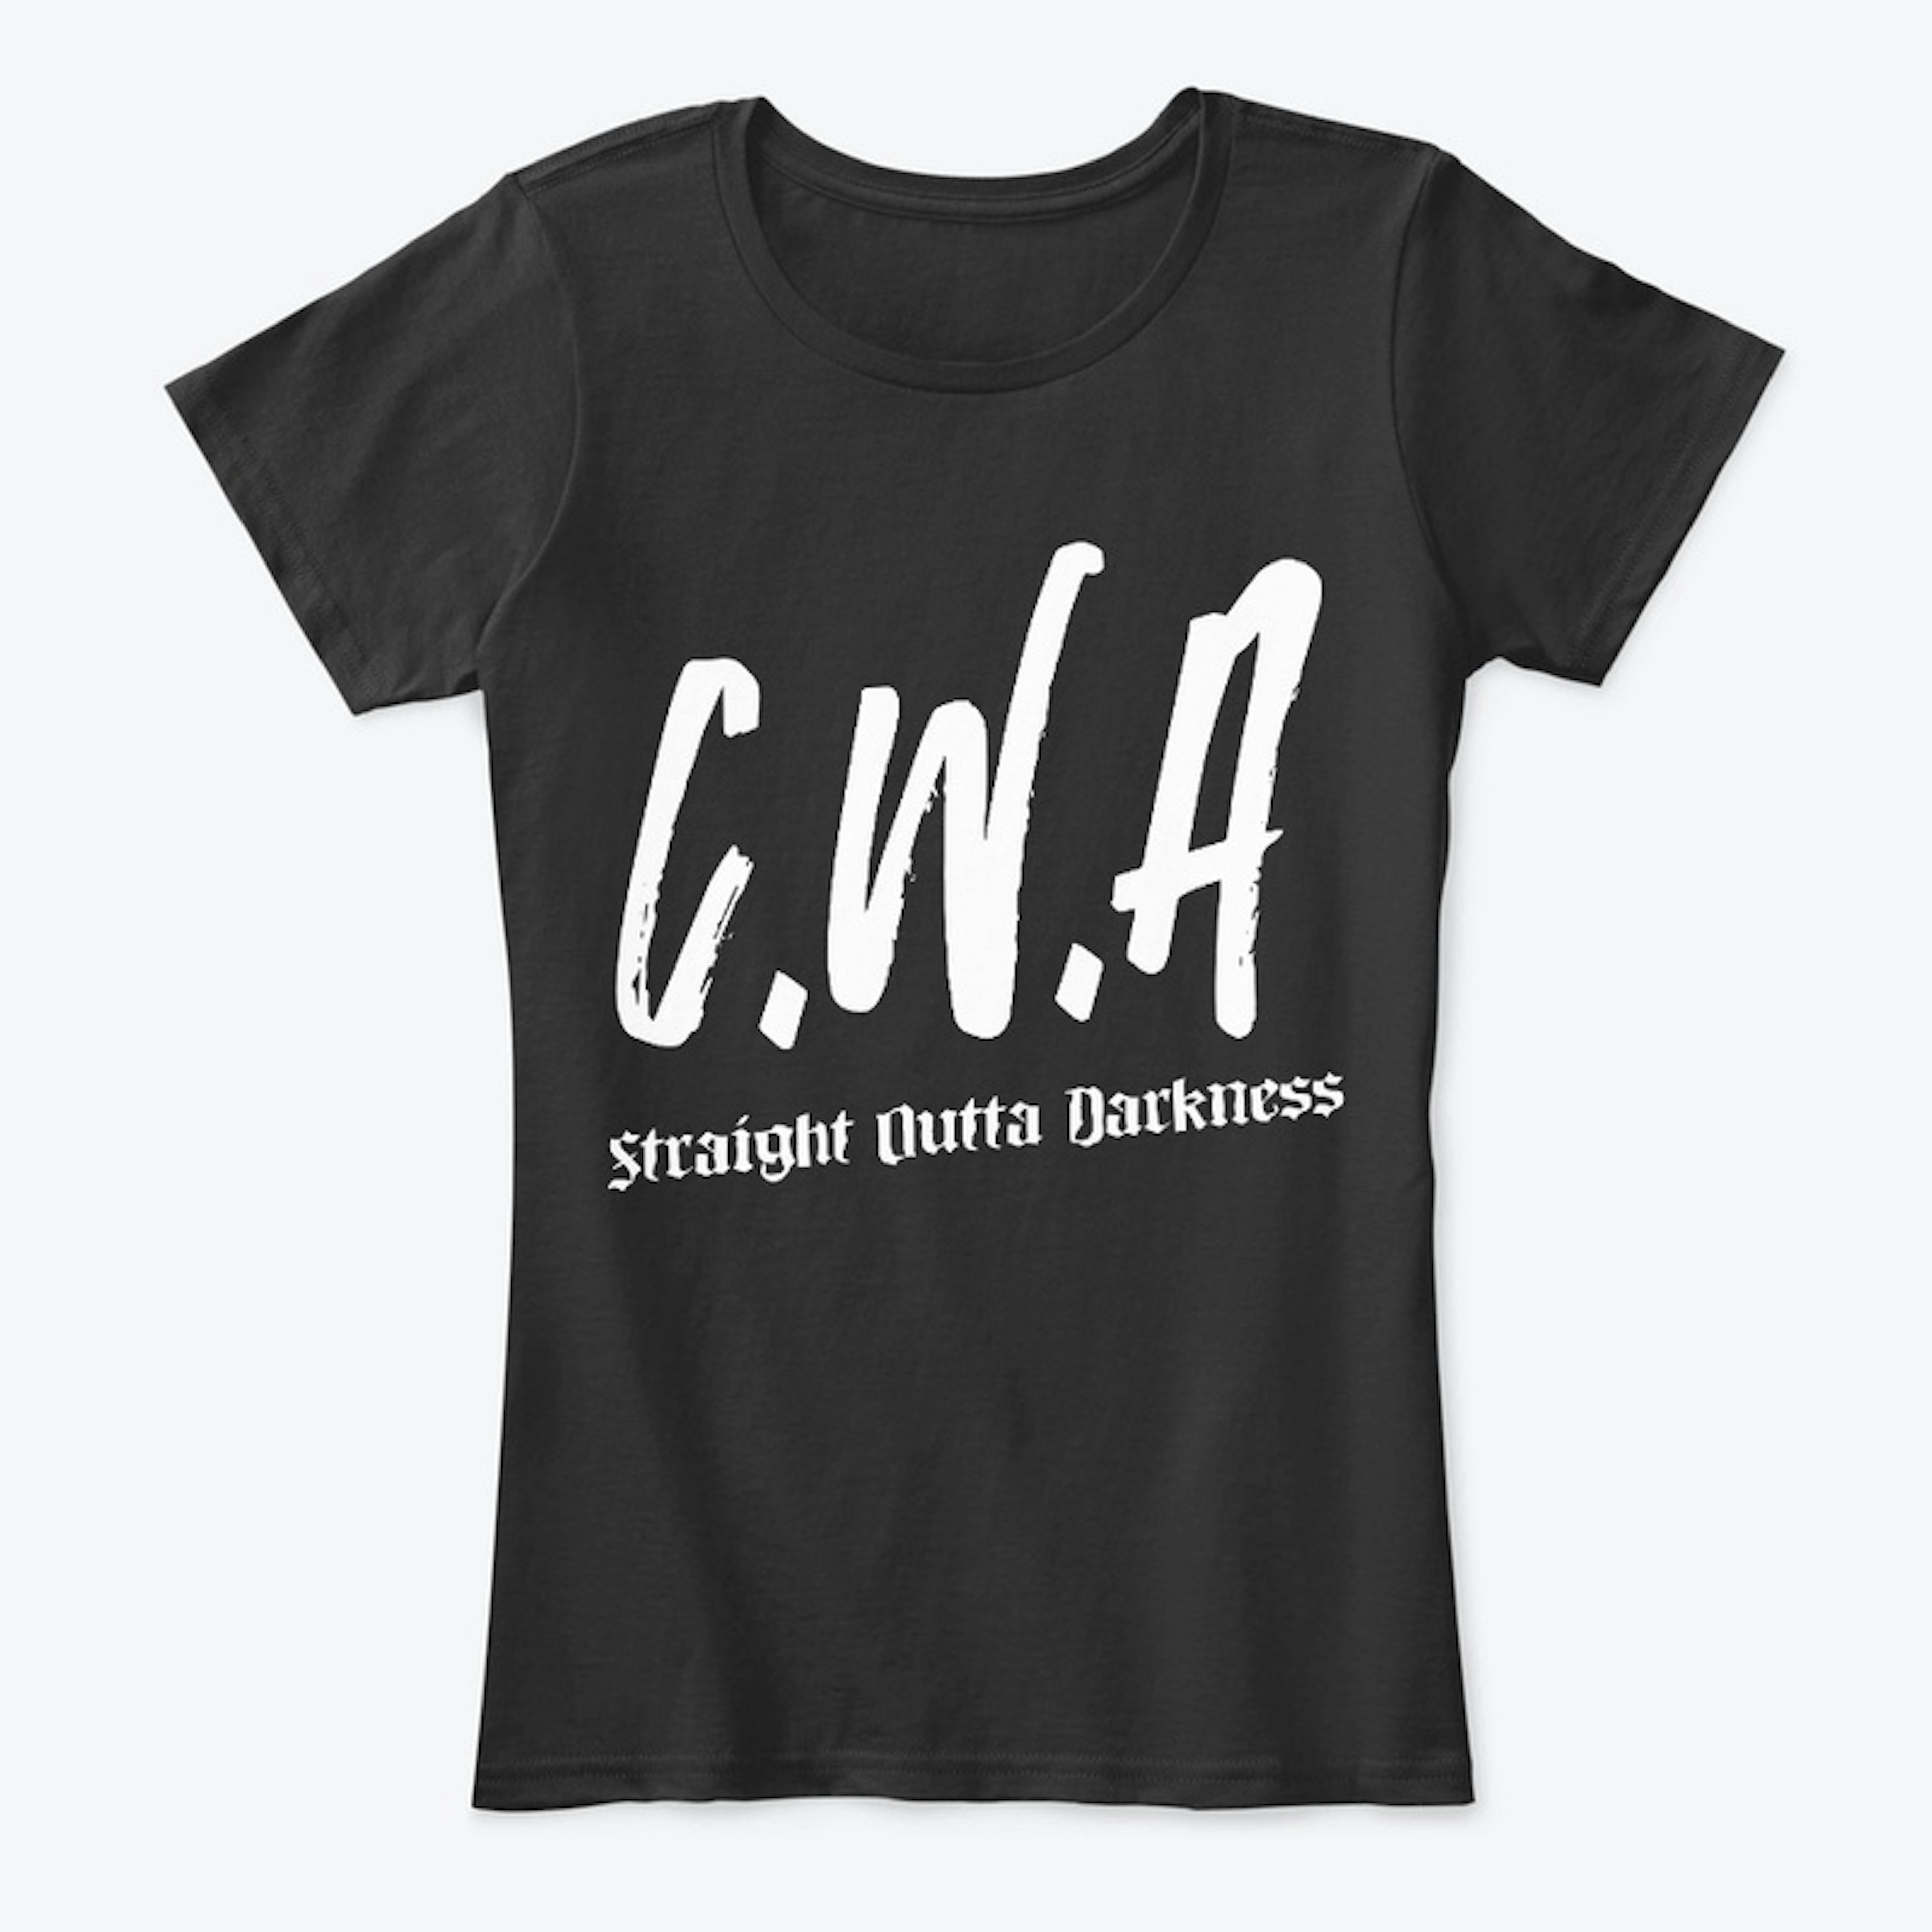 CWA - Christianz Wit Attitudes